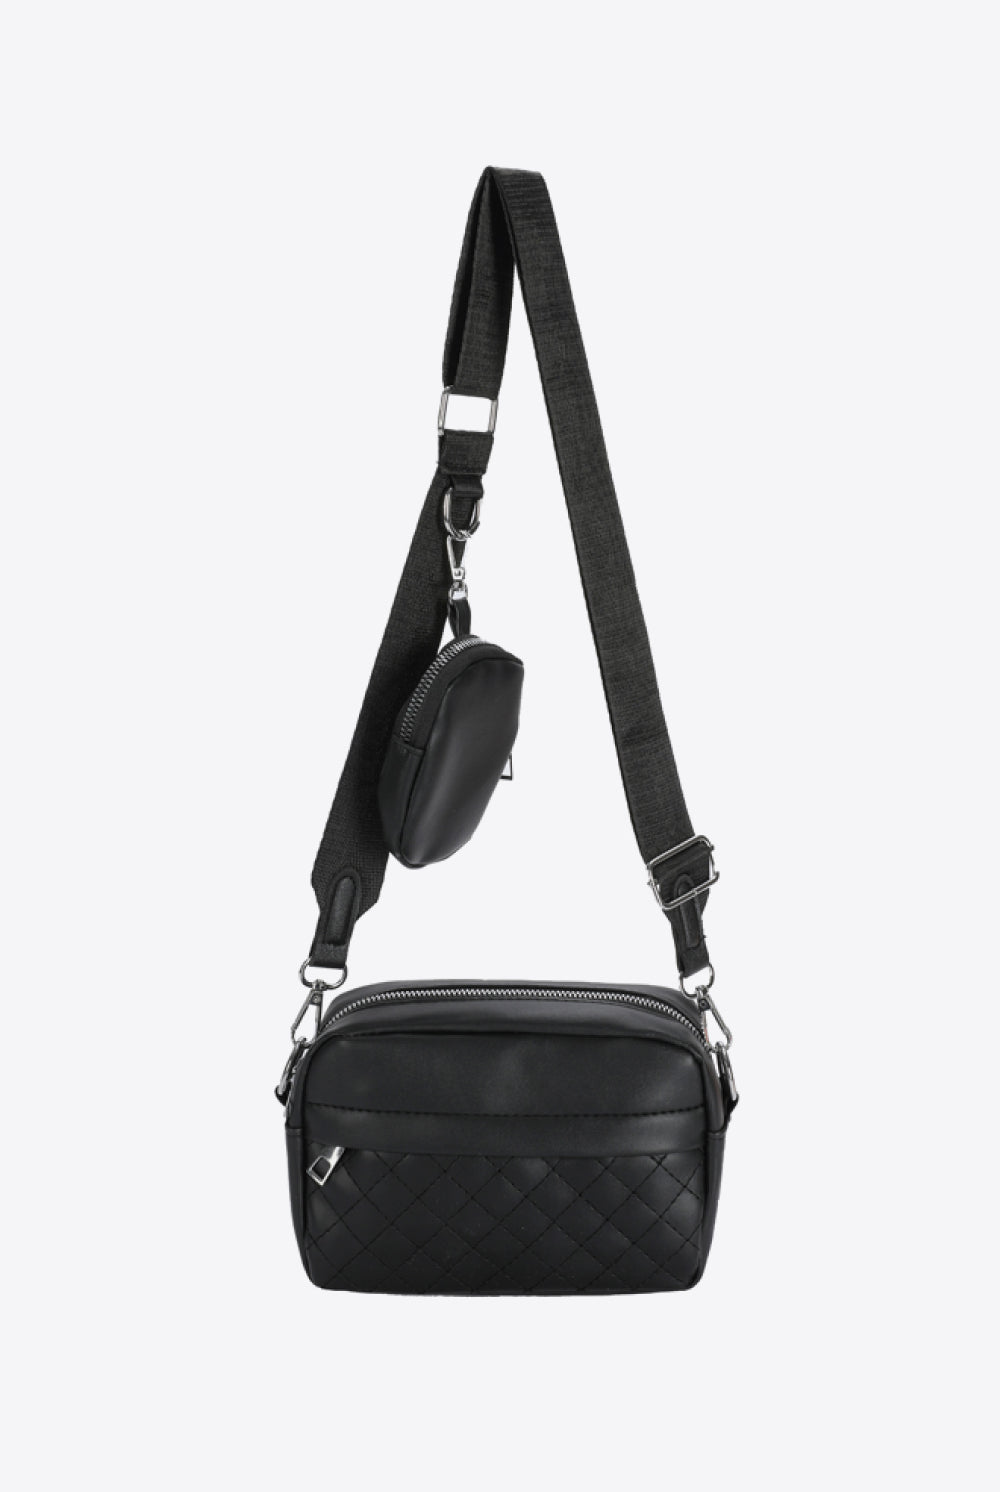 White Smoke Adored PU Leather Shoulder Bag with Small Purse Handbags